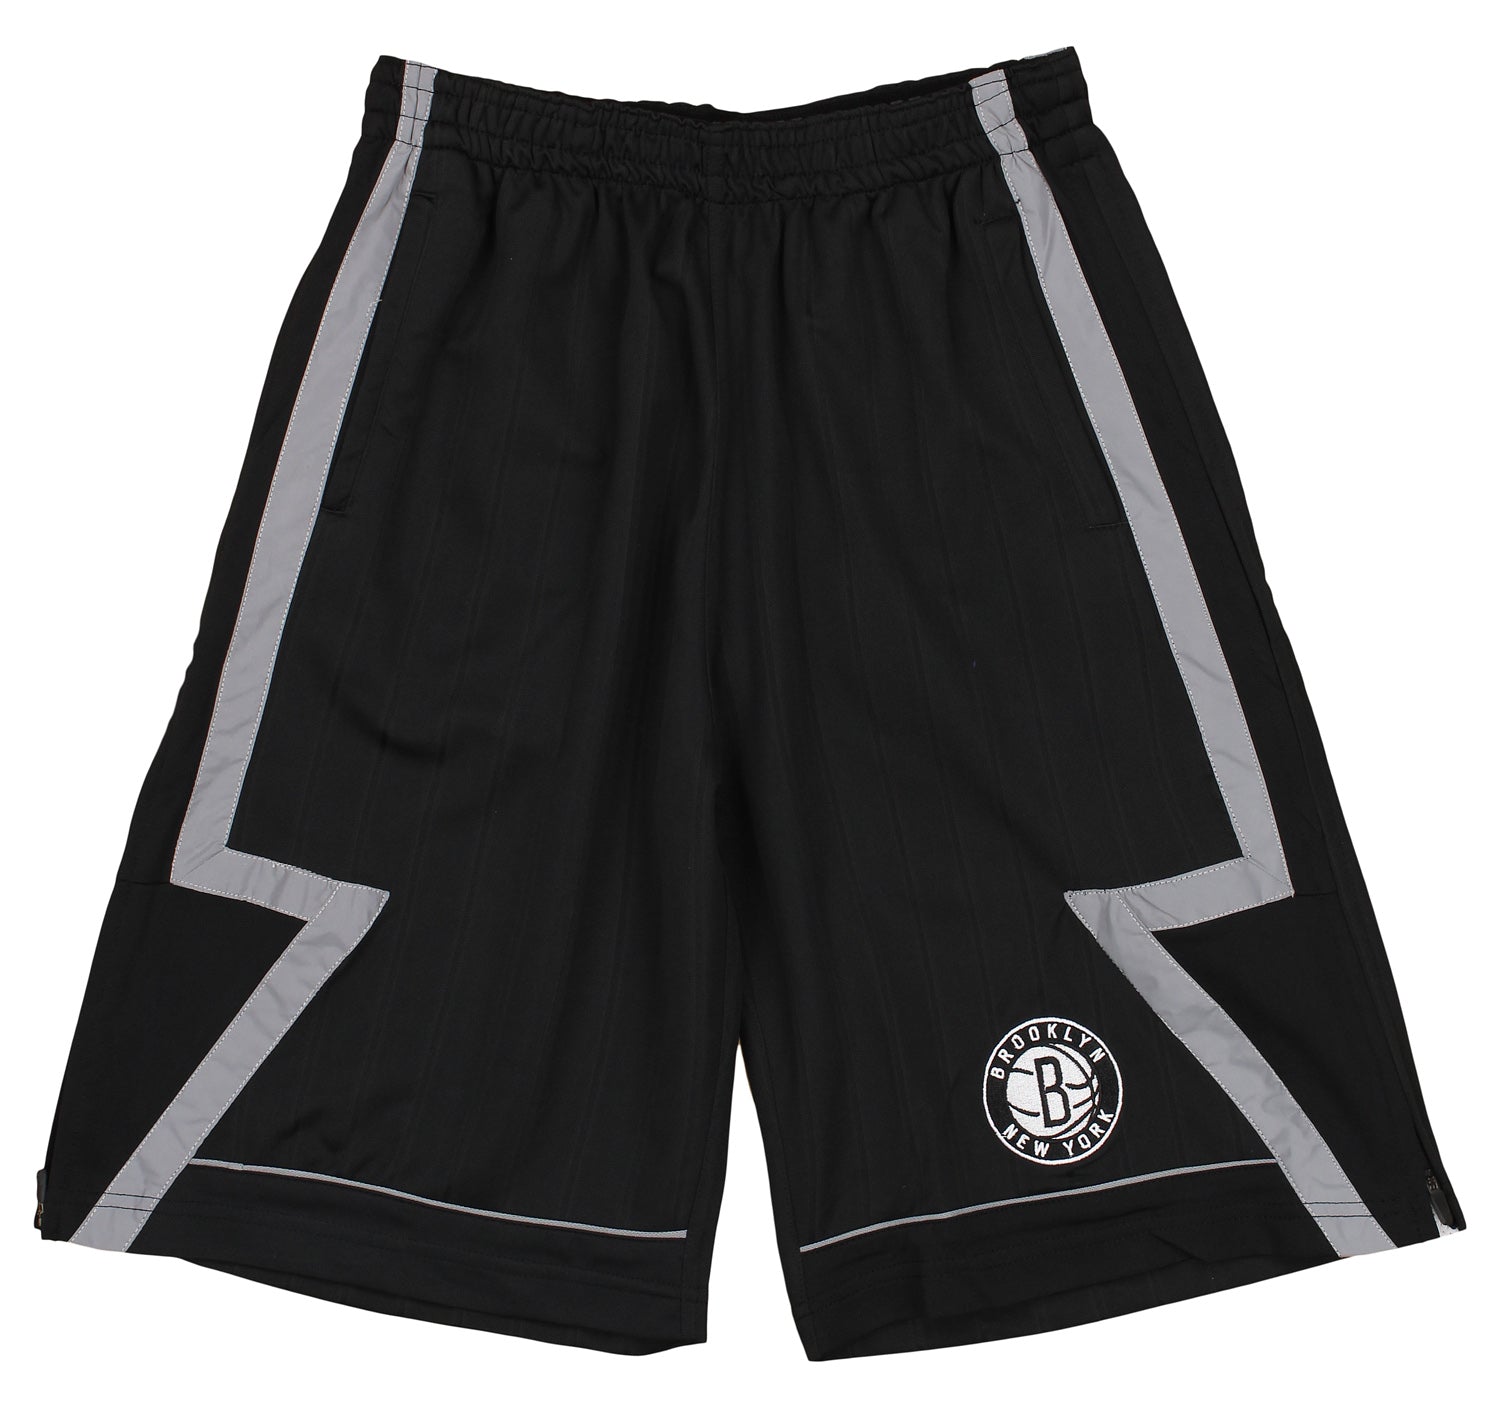 Zipway NBA Youth Brooklyn Nets Chaz Athletic Basketball Shorts, Black - Small (8)